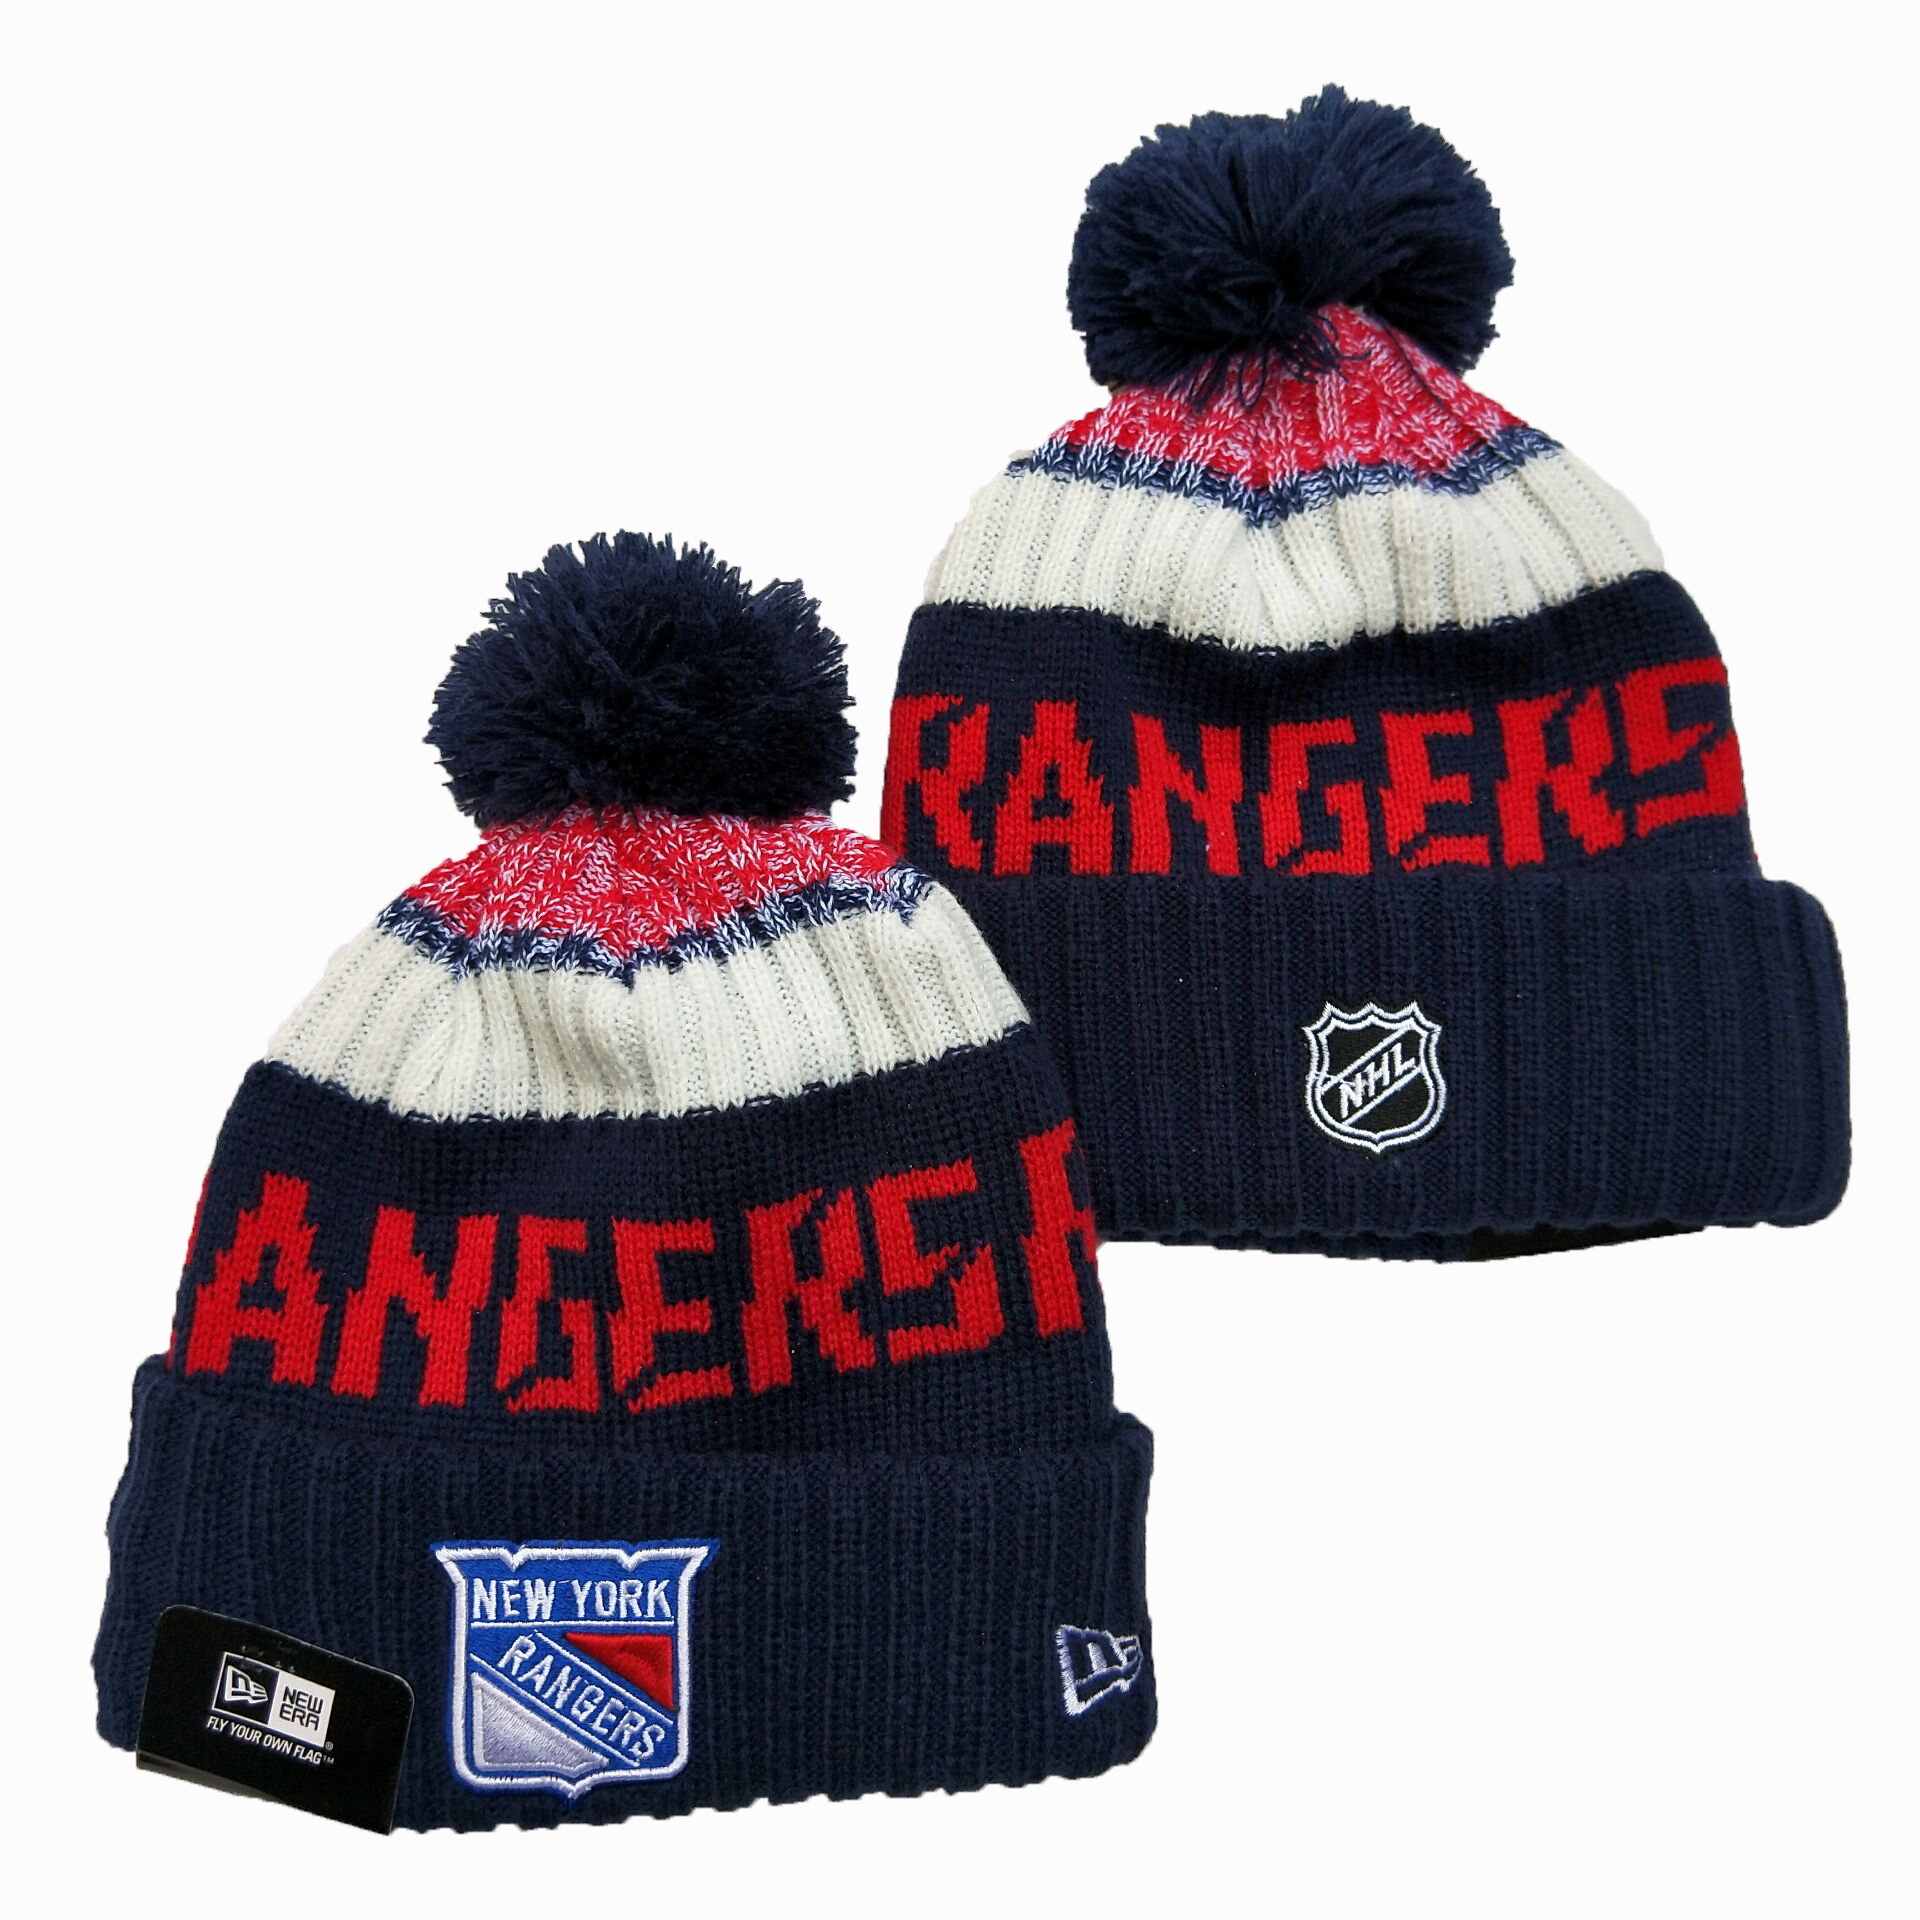 New York Rangers Knit Hats -2